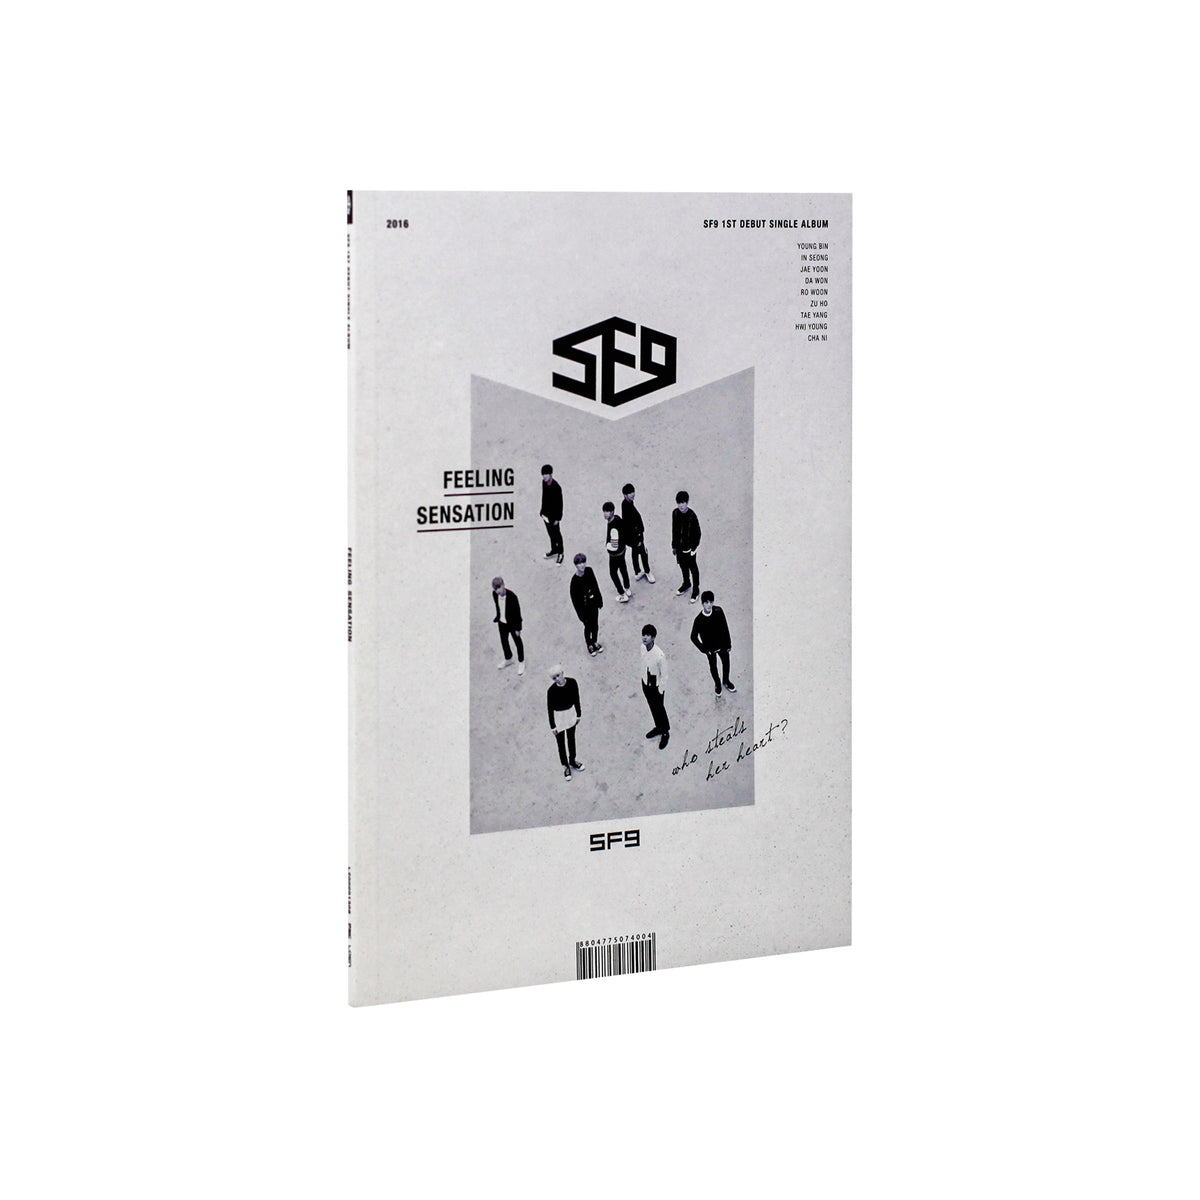 SF9 - Feeling Sensation Debut Single Album - main image - image 2